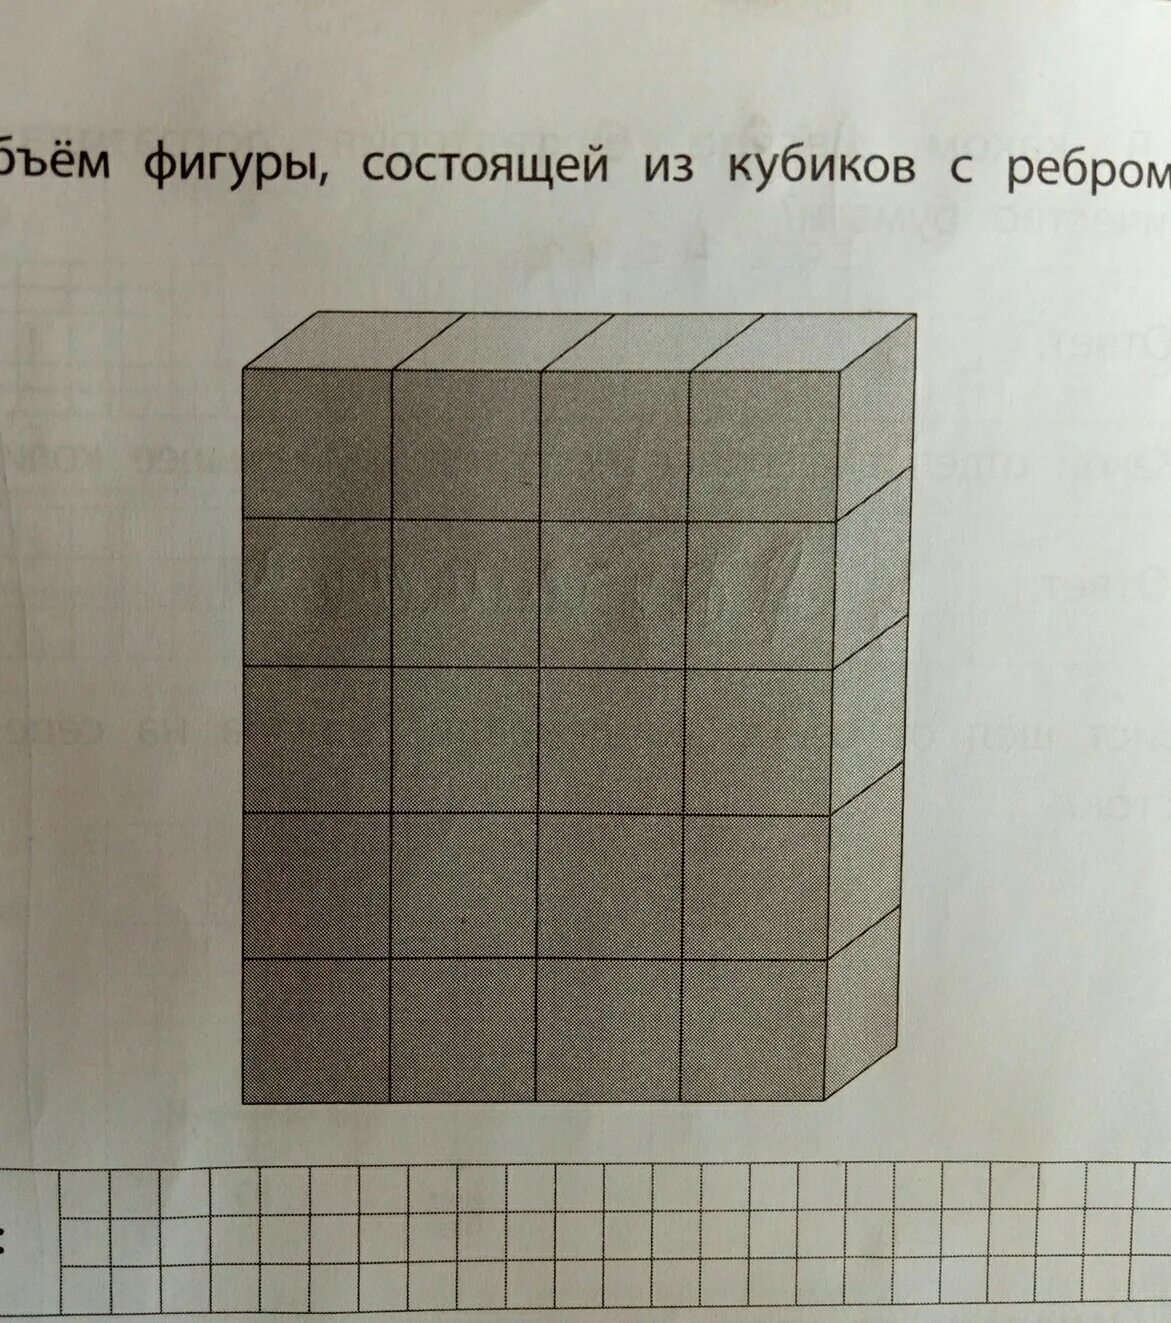 Фигура из кубиков с ребром. Кубик из ребер. Ребро кубика. Объем фигур из кубиков.